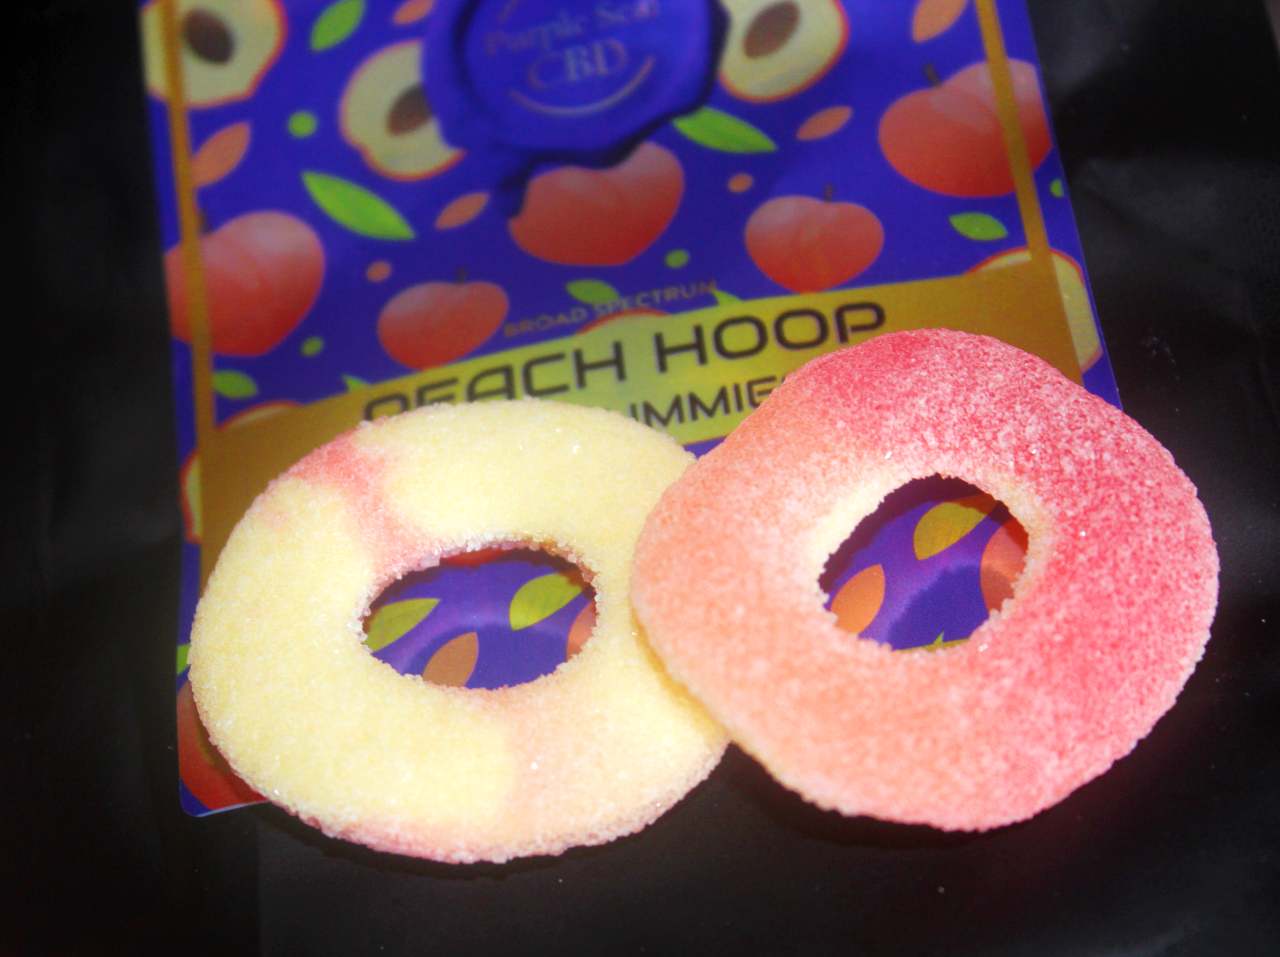 Purple Seal CBD - 40mg Peach Hoops CBD Gummies Review